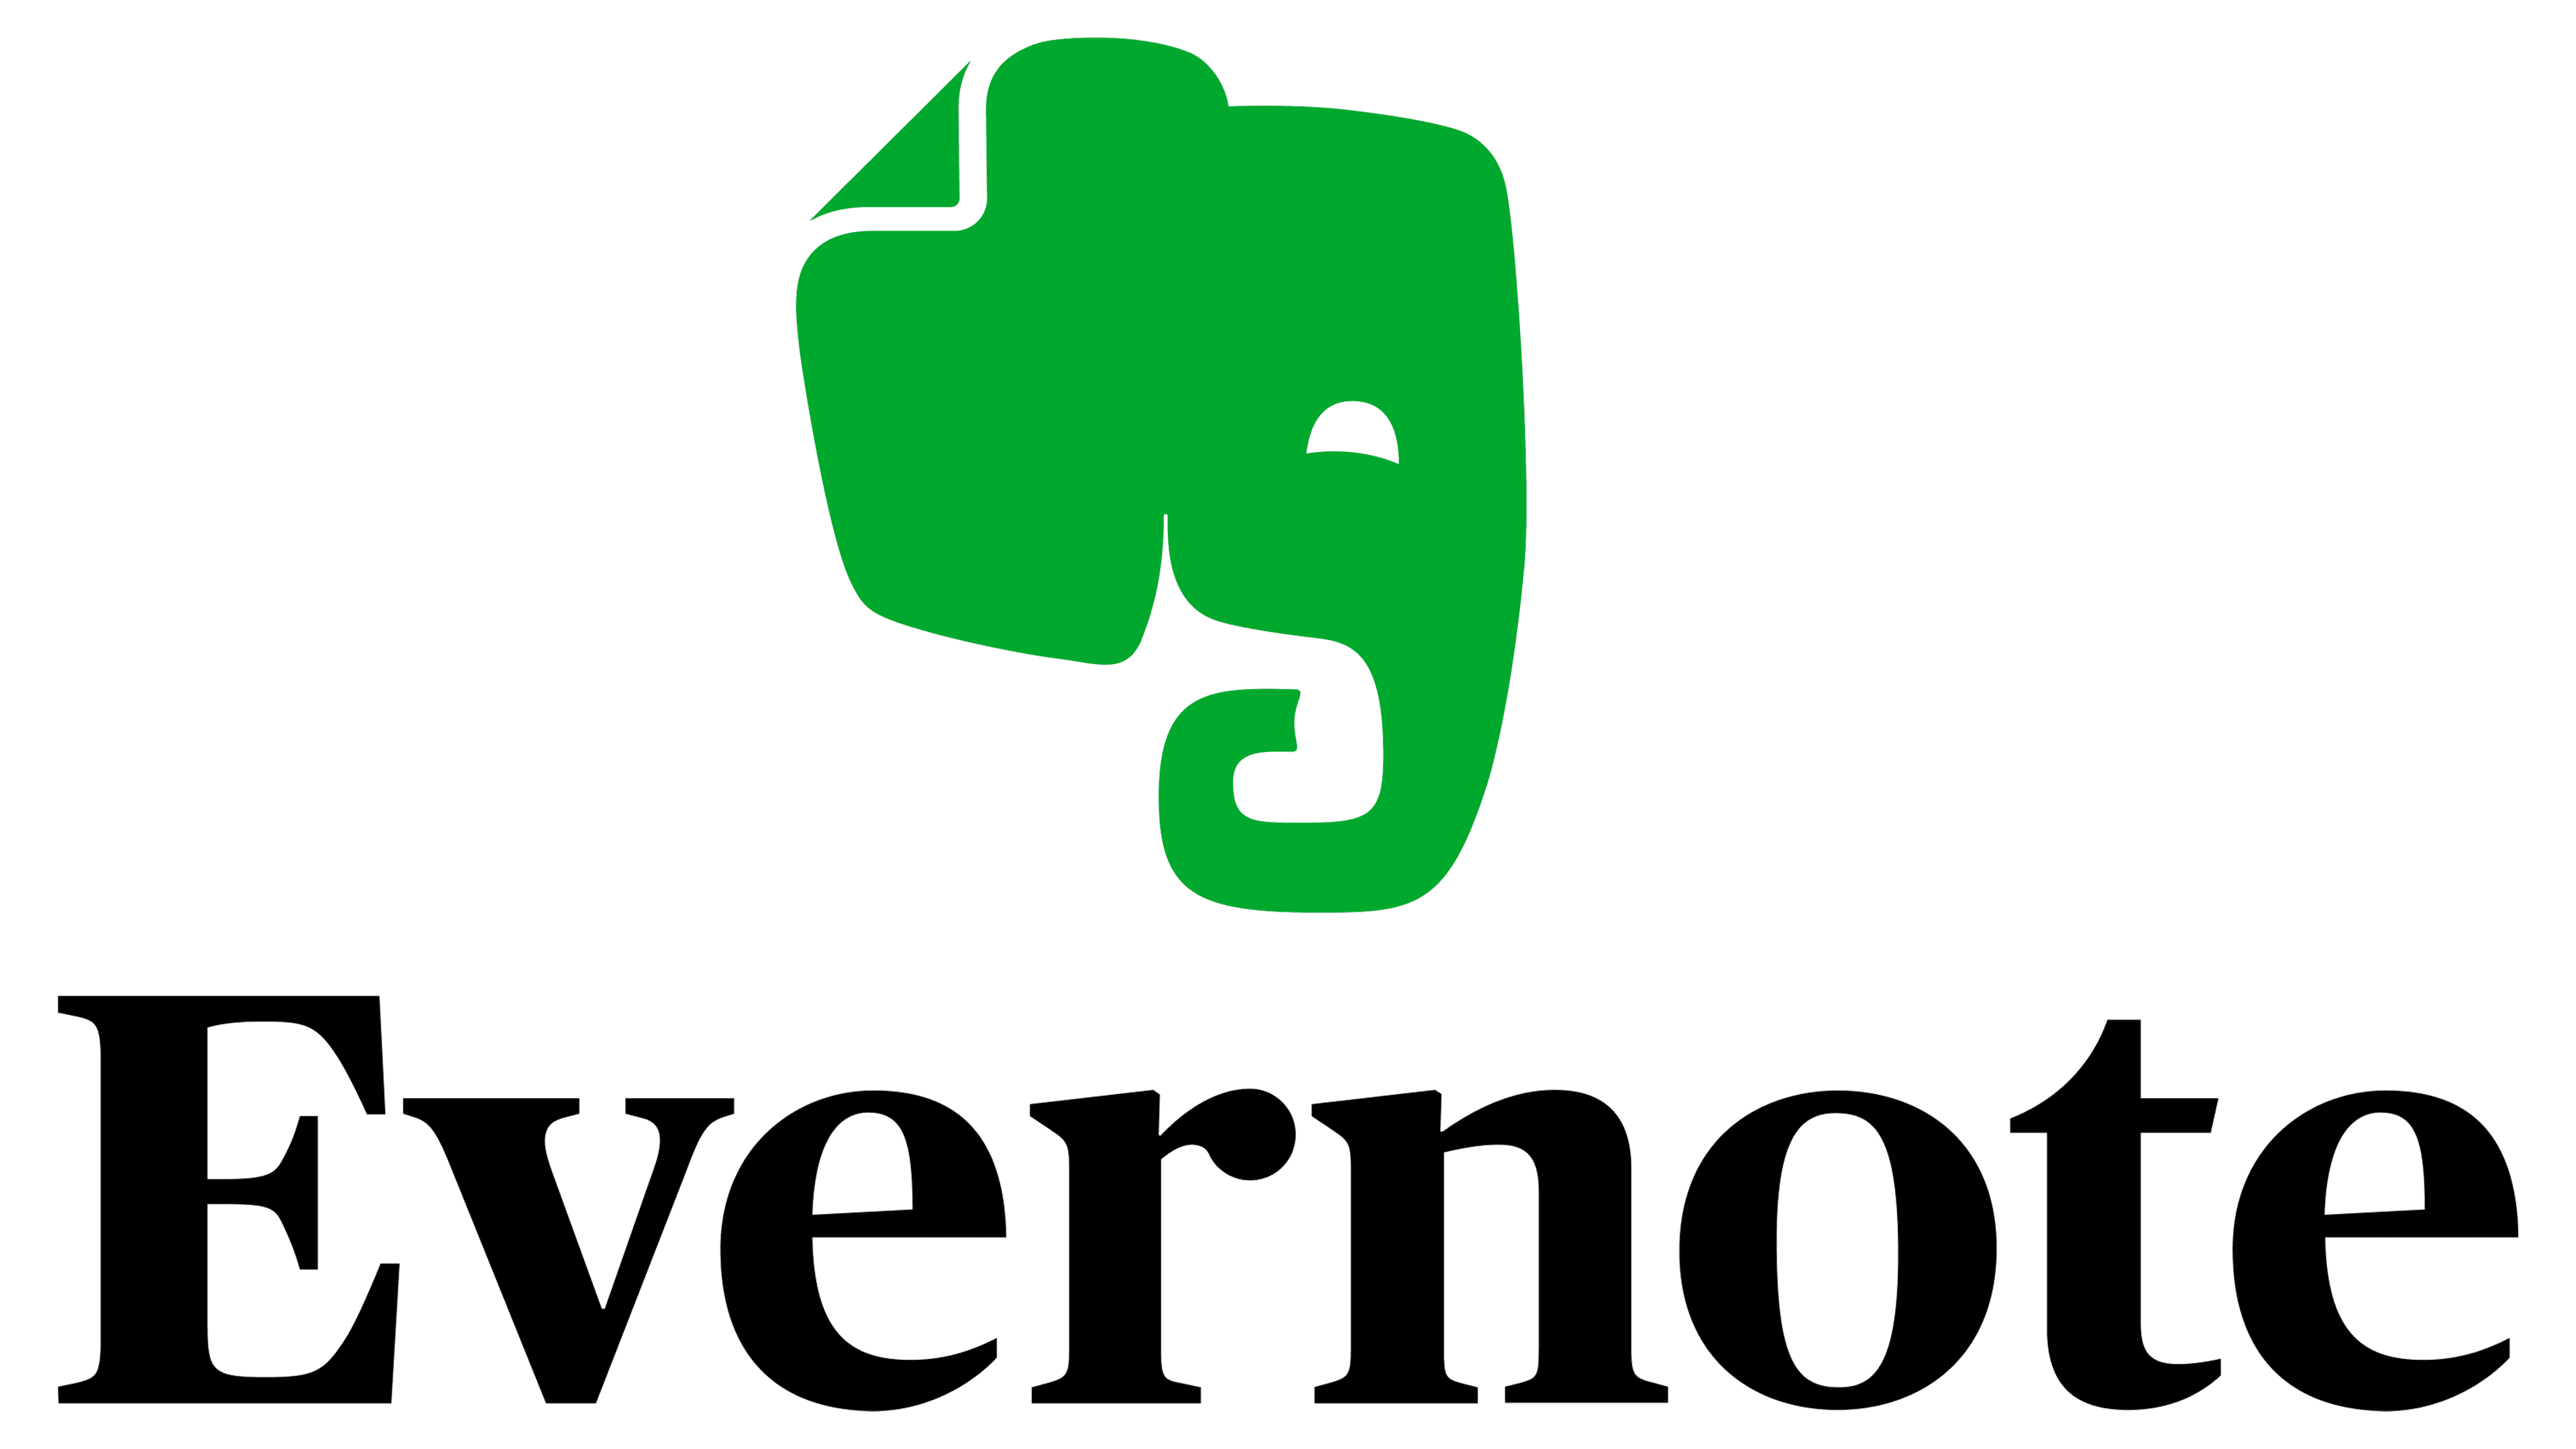 evernote logo old